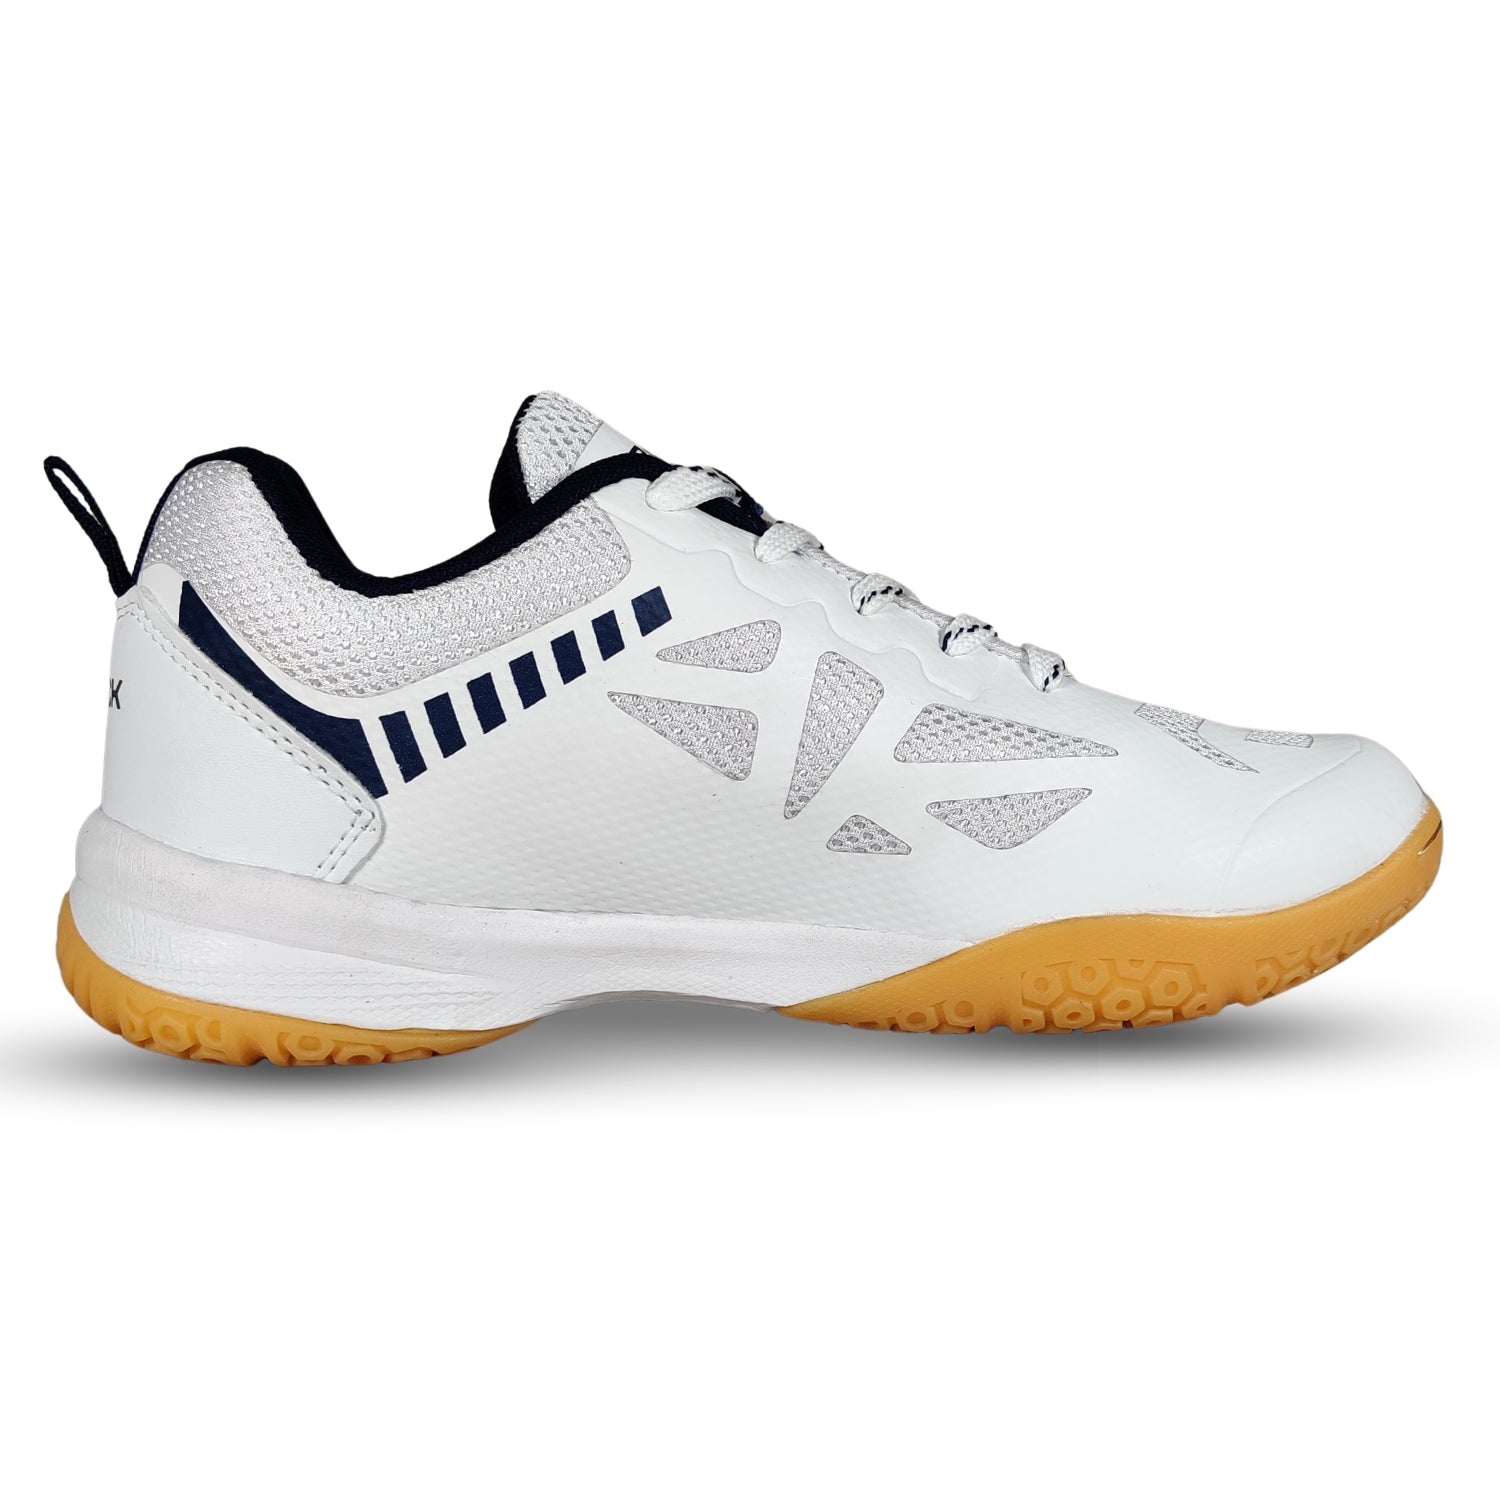 Prokick Power Plus Badminton Shoes - Best Price online Prokicksports.com